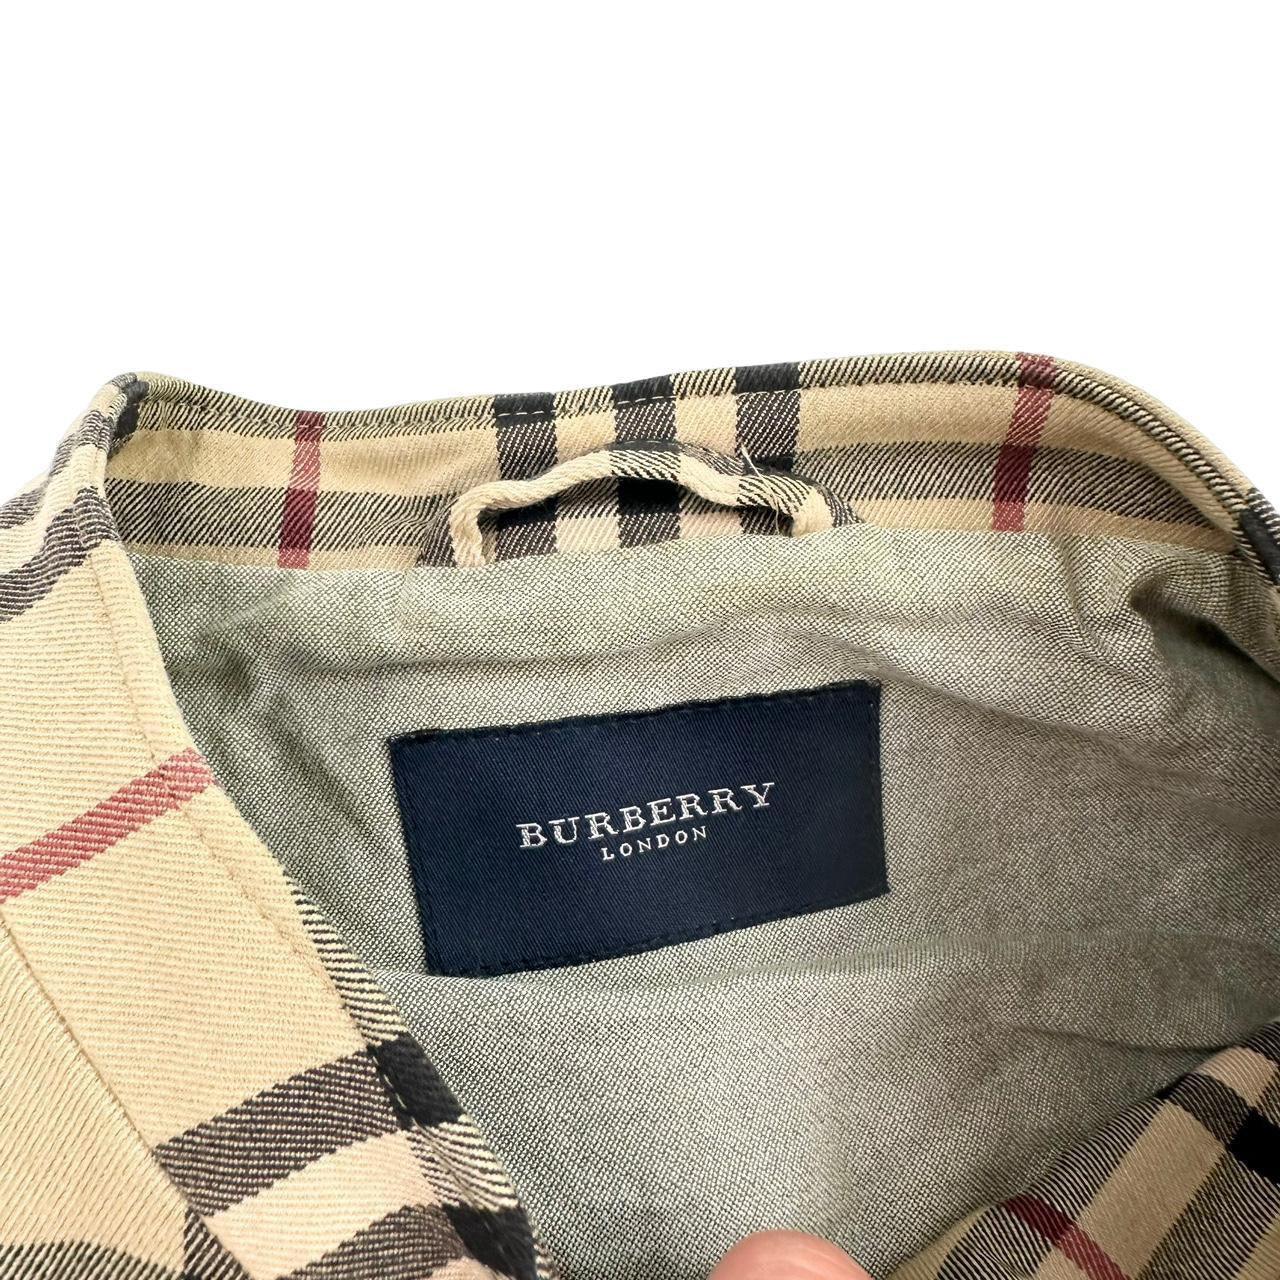 Burberry nova check jacket size L - Known Source